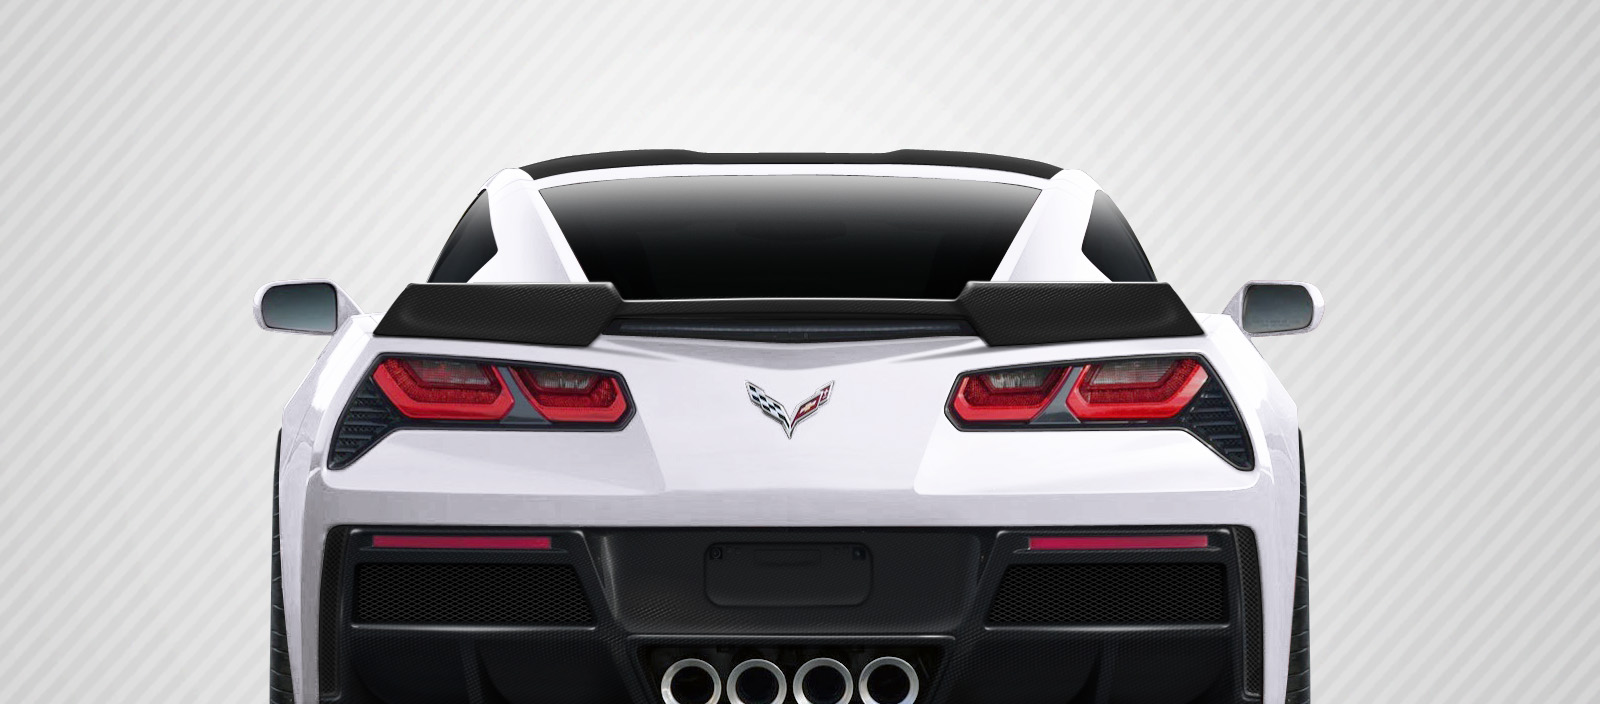 Wing Spoiler Bodykit for 2016 Chevrolet Corvette ALL - Chevrolet Corvette C7 Carbon Creations Gran Veloce Wing- 1 Piece